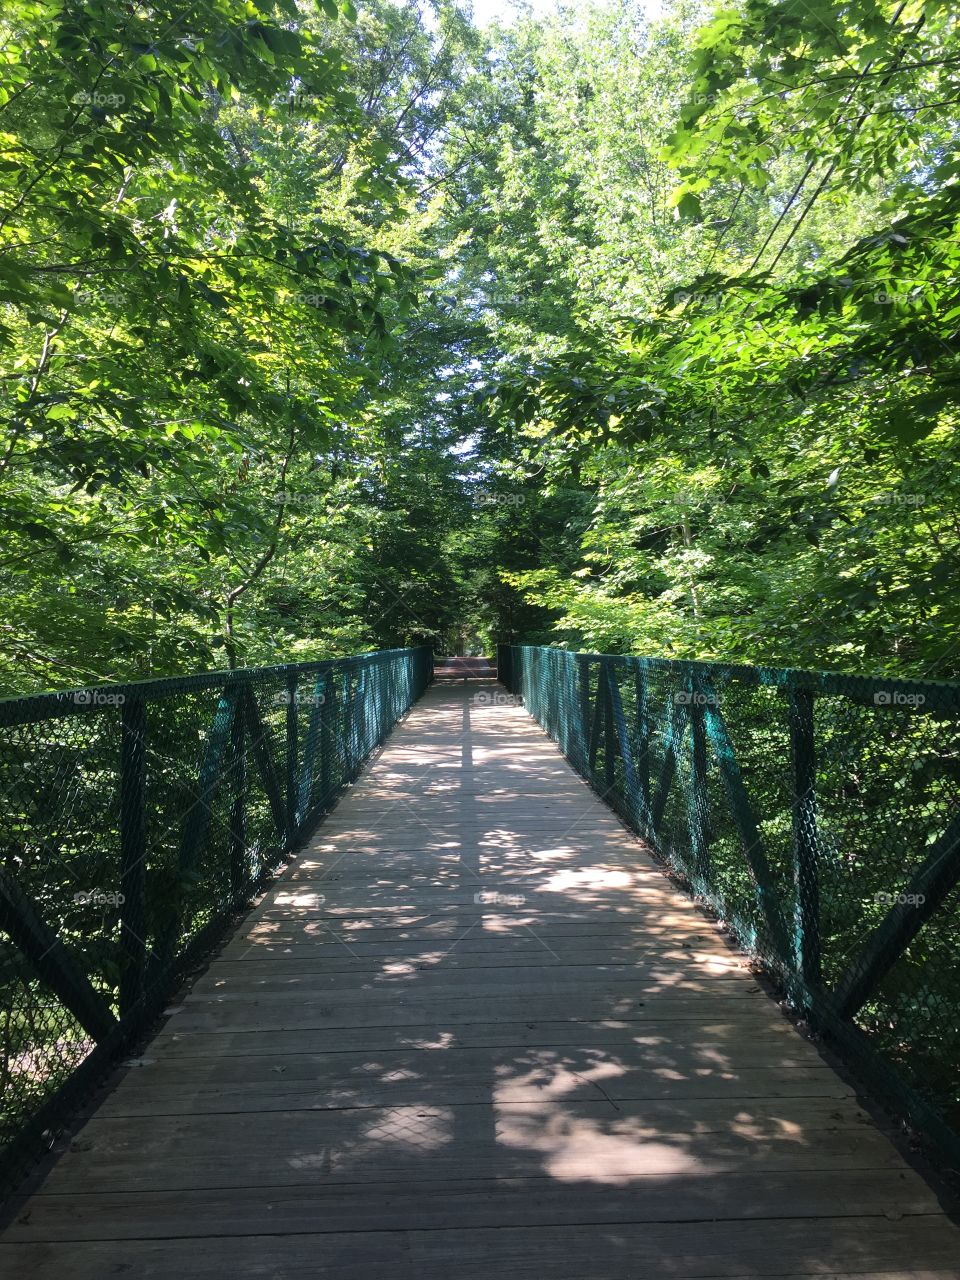 Striding across the bridge, I felt overwhelmed by the greenery surrounding me...